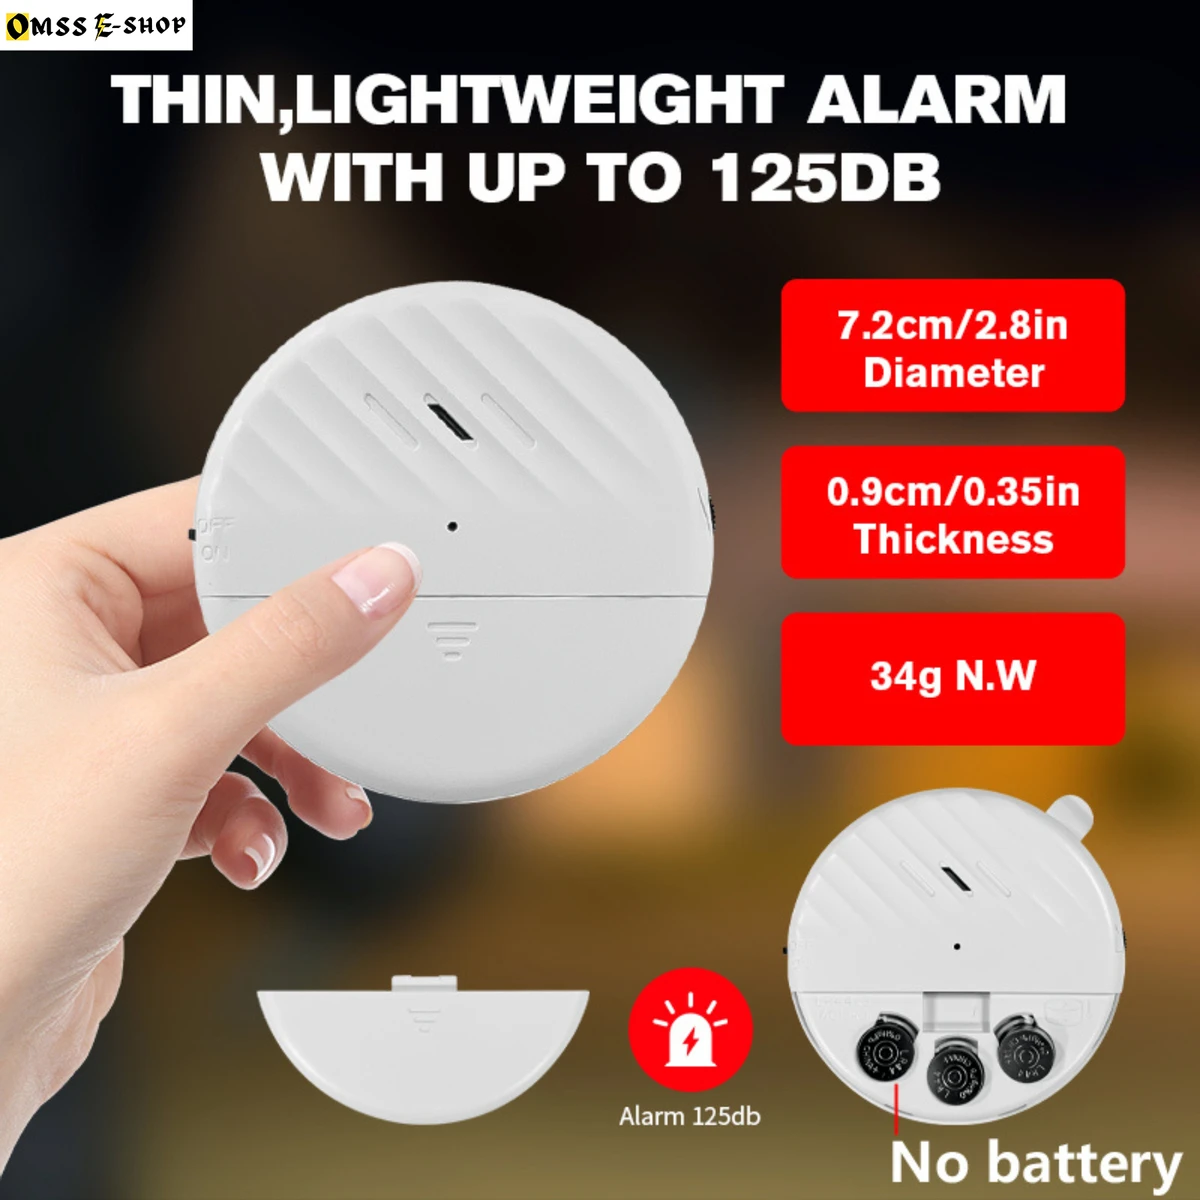 Window Vibration Sensor Alarm With 125dB Loud Alarm, Glass Break Sensor Alarm for Home and Office